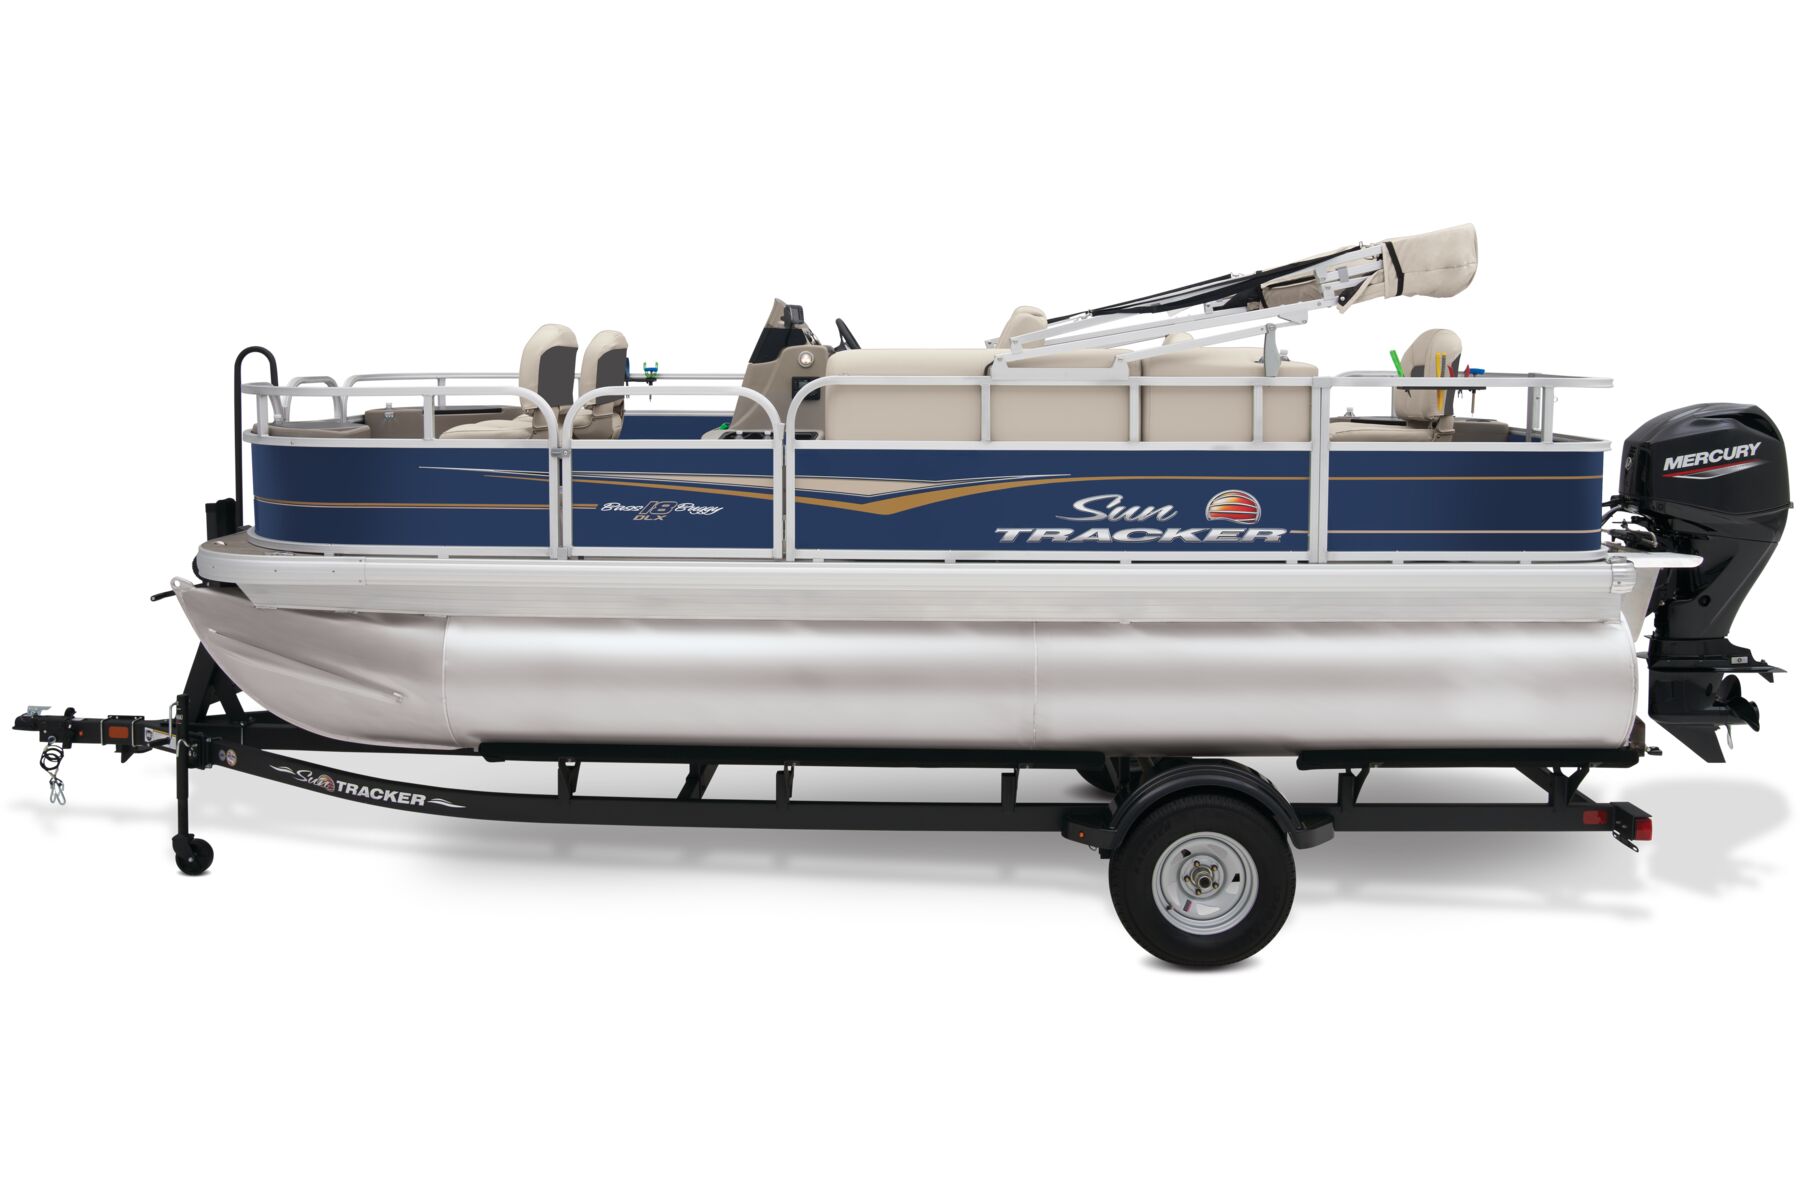 BASS BUGGY 18 DLX - SUN TRACKER Fishing Pontoon Boat